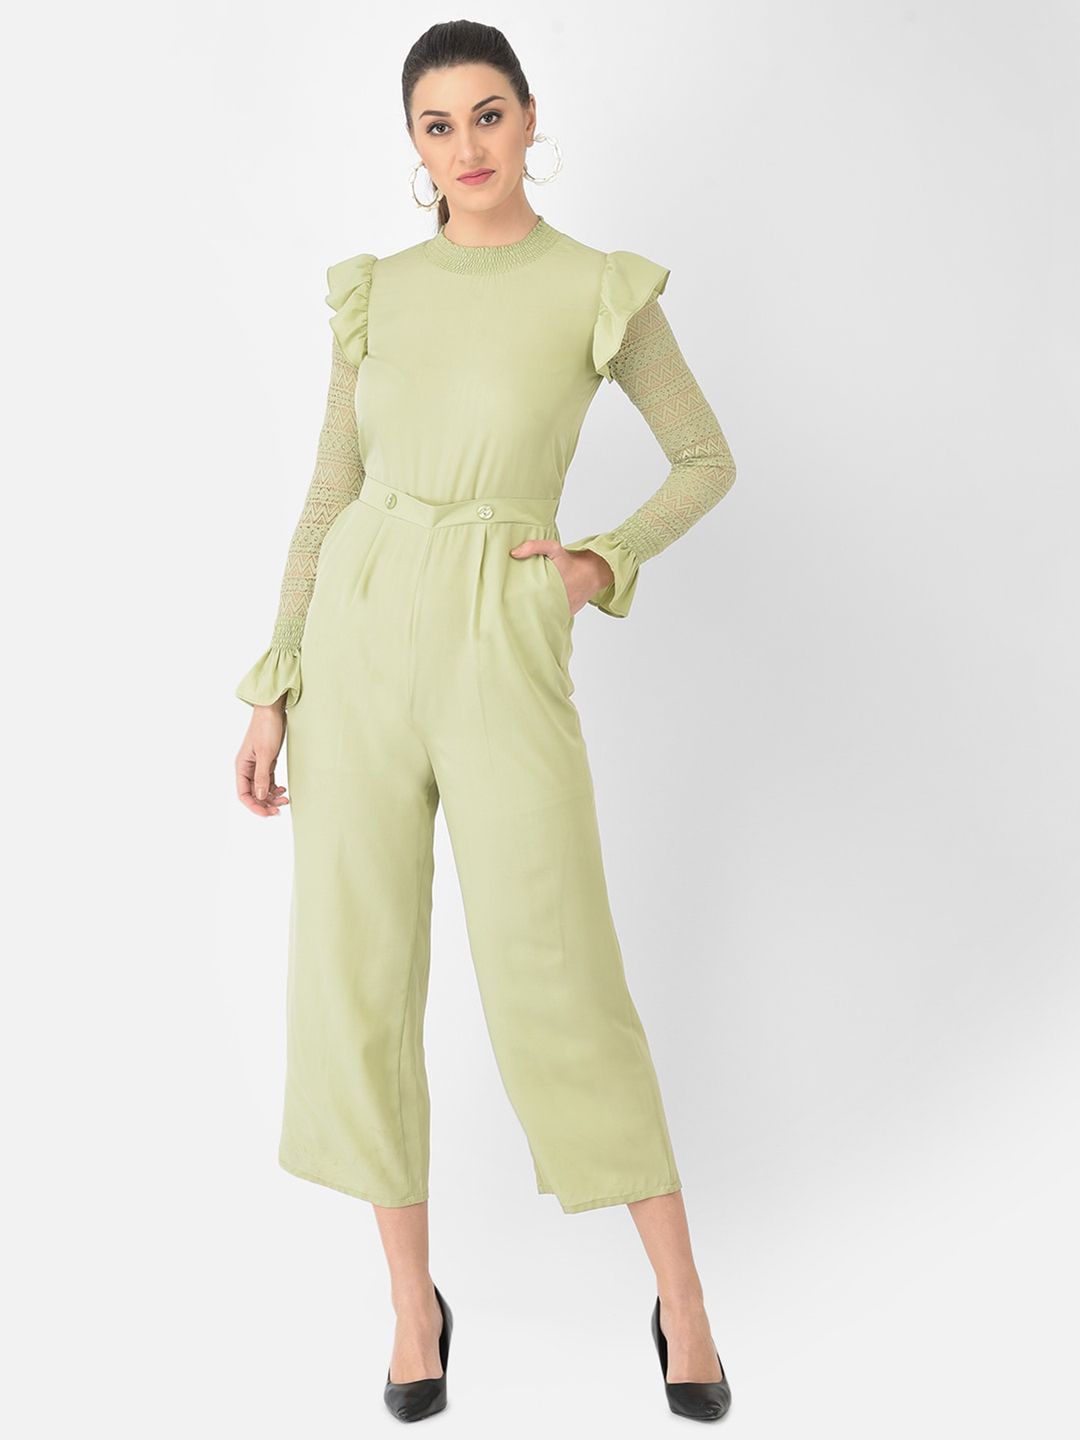 Eavan Green Basic Jumpsuit Price in India